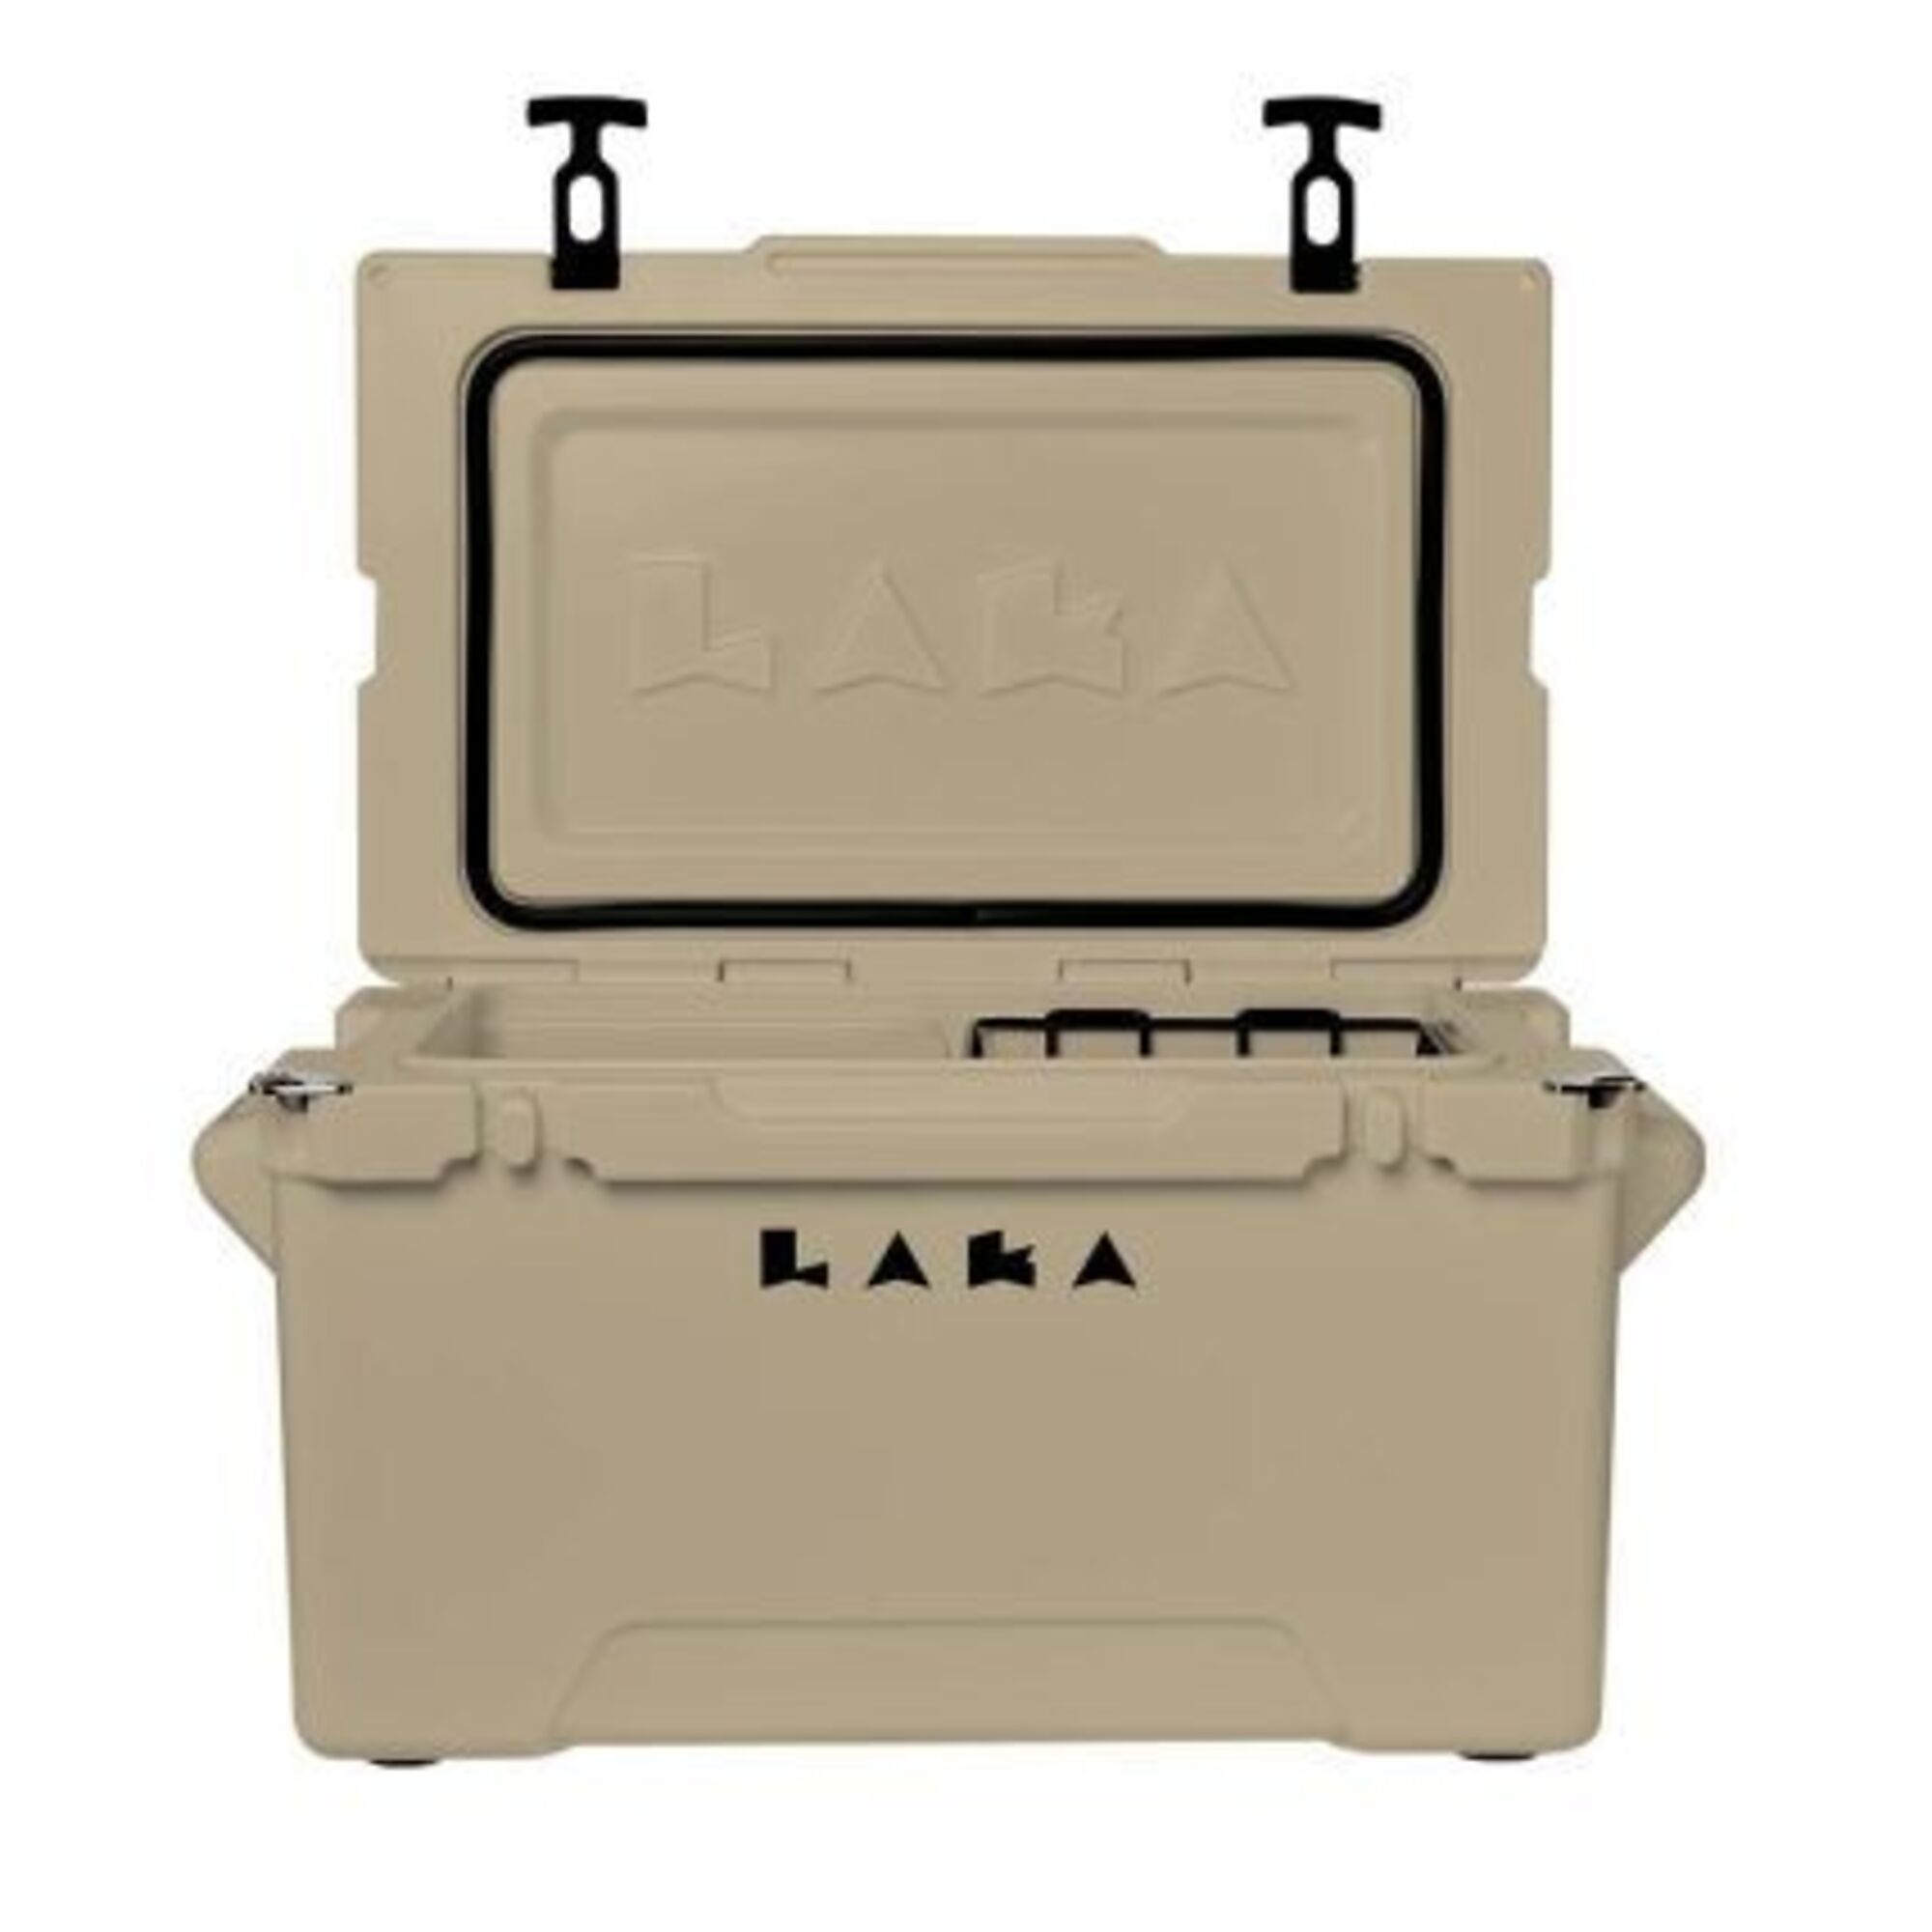 LAKA Cooler, 45 Quart Cooler - Tan, Capacity 11.25 Gal, Model 1014